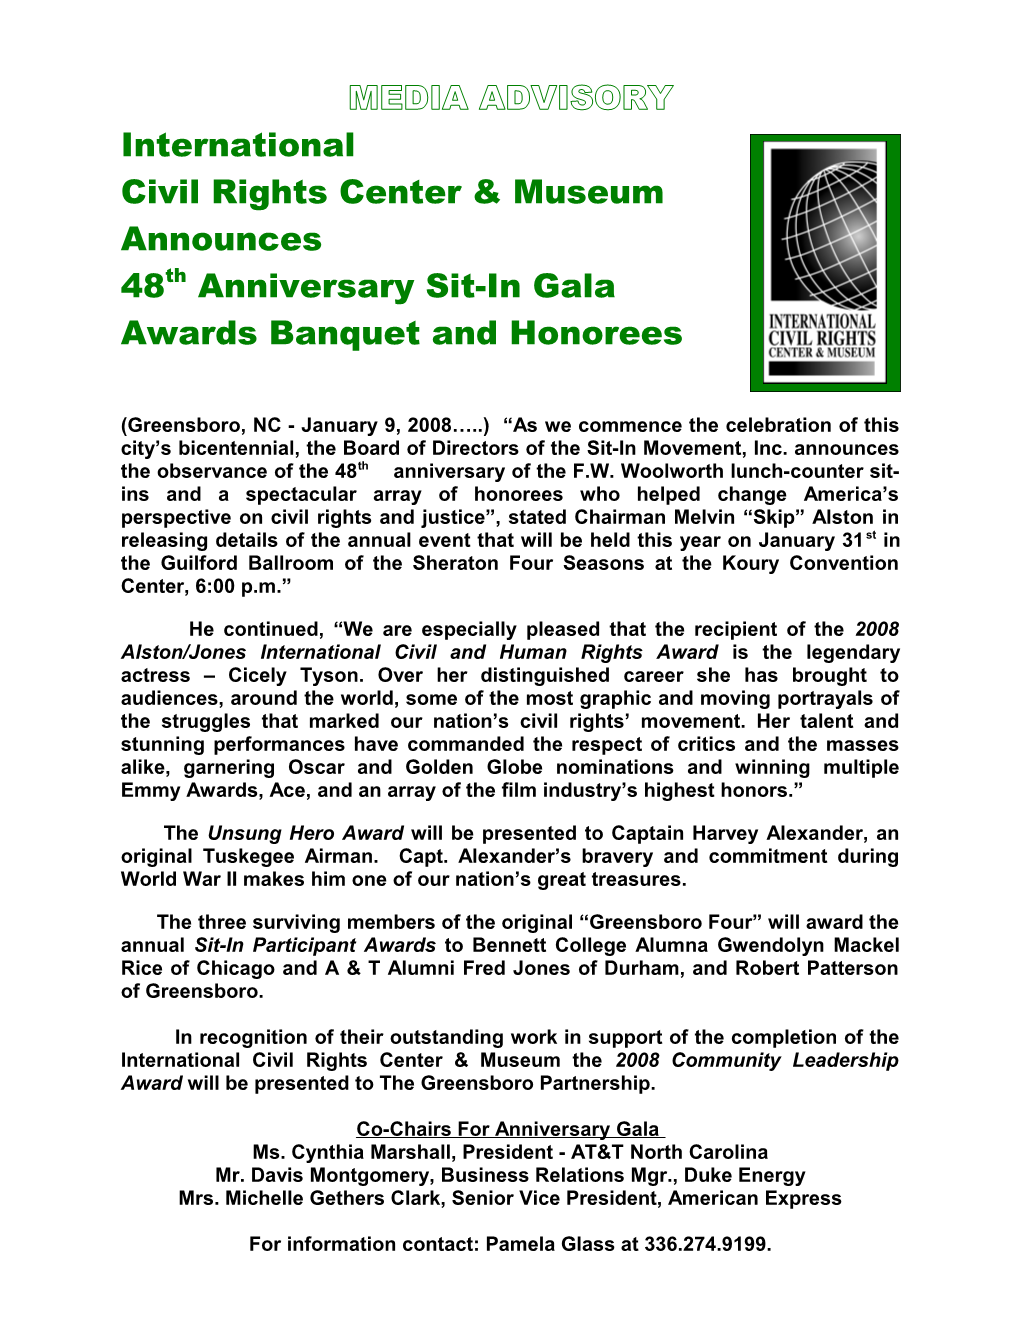 Civil Rights Museum Announces